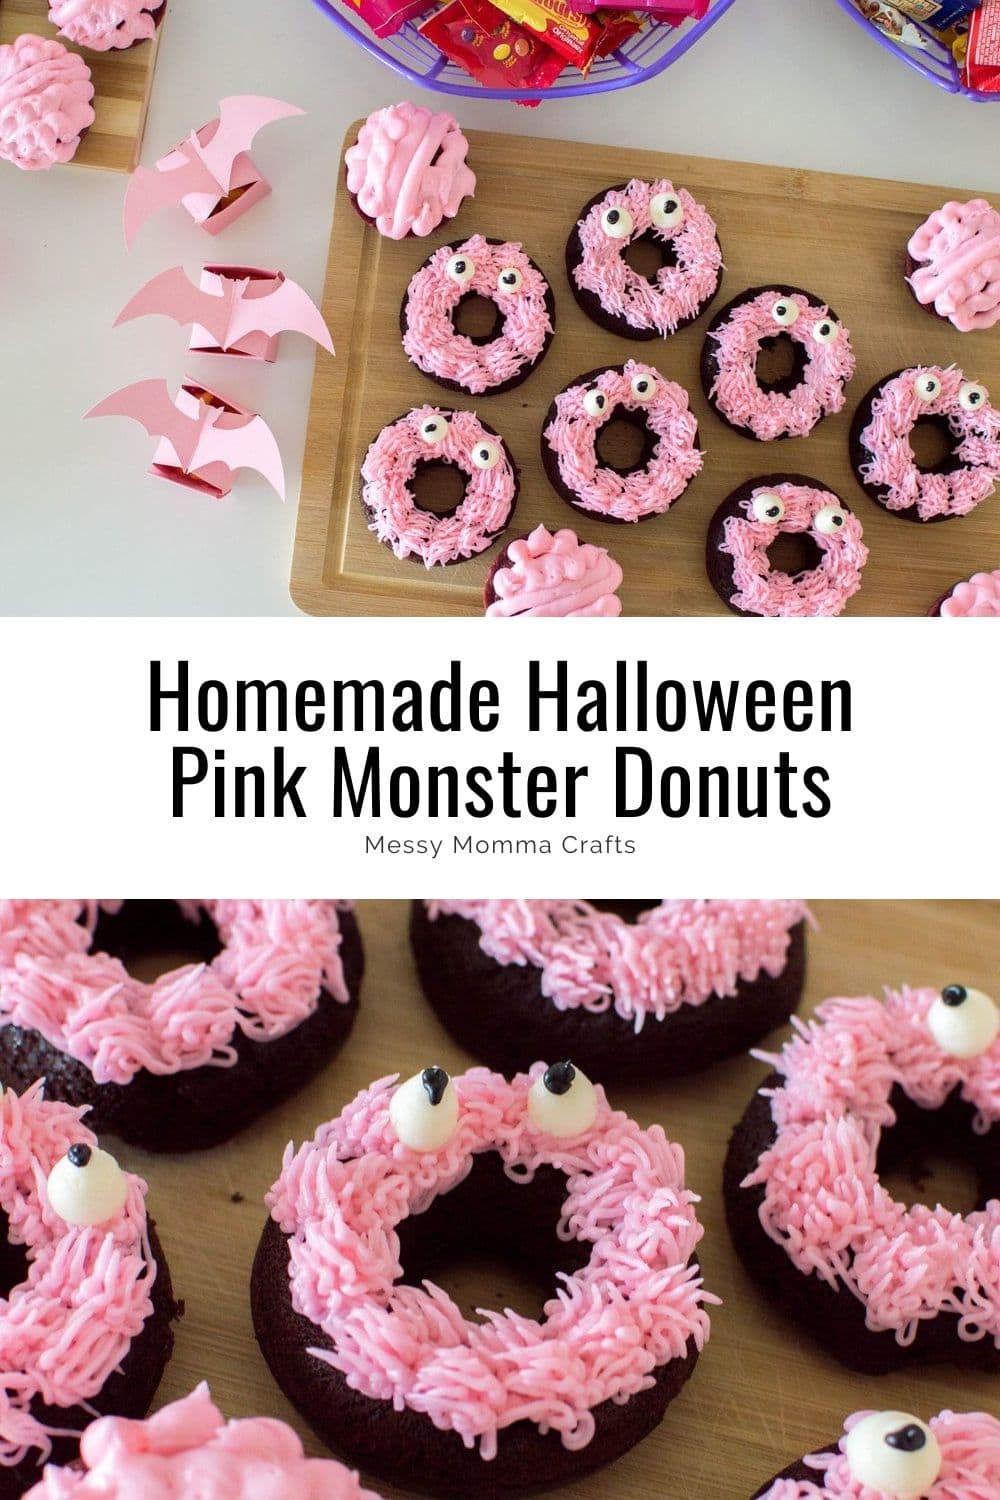 Homemade Halloween pink monster donuts.